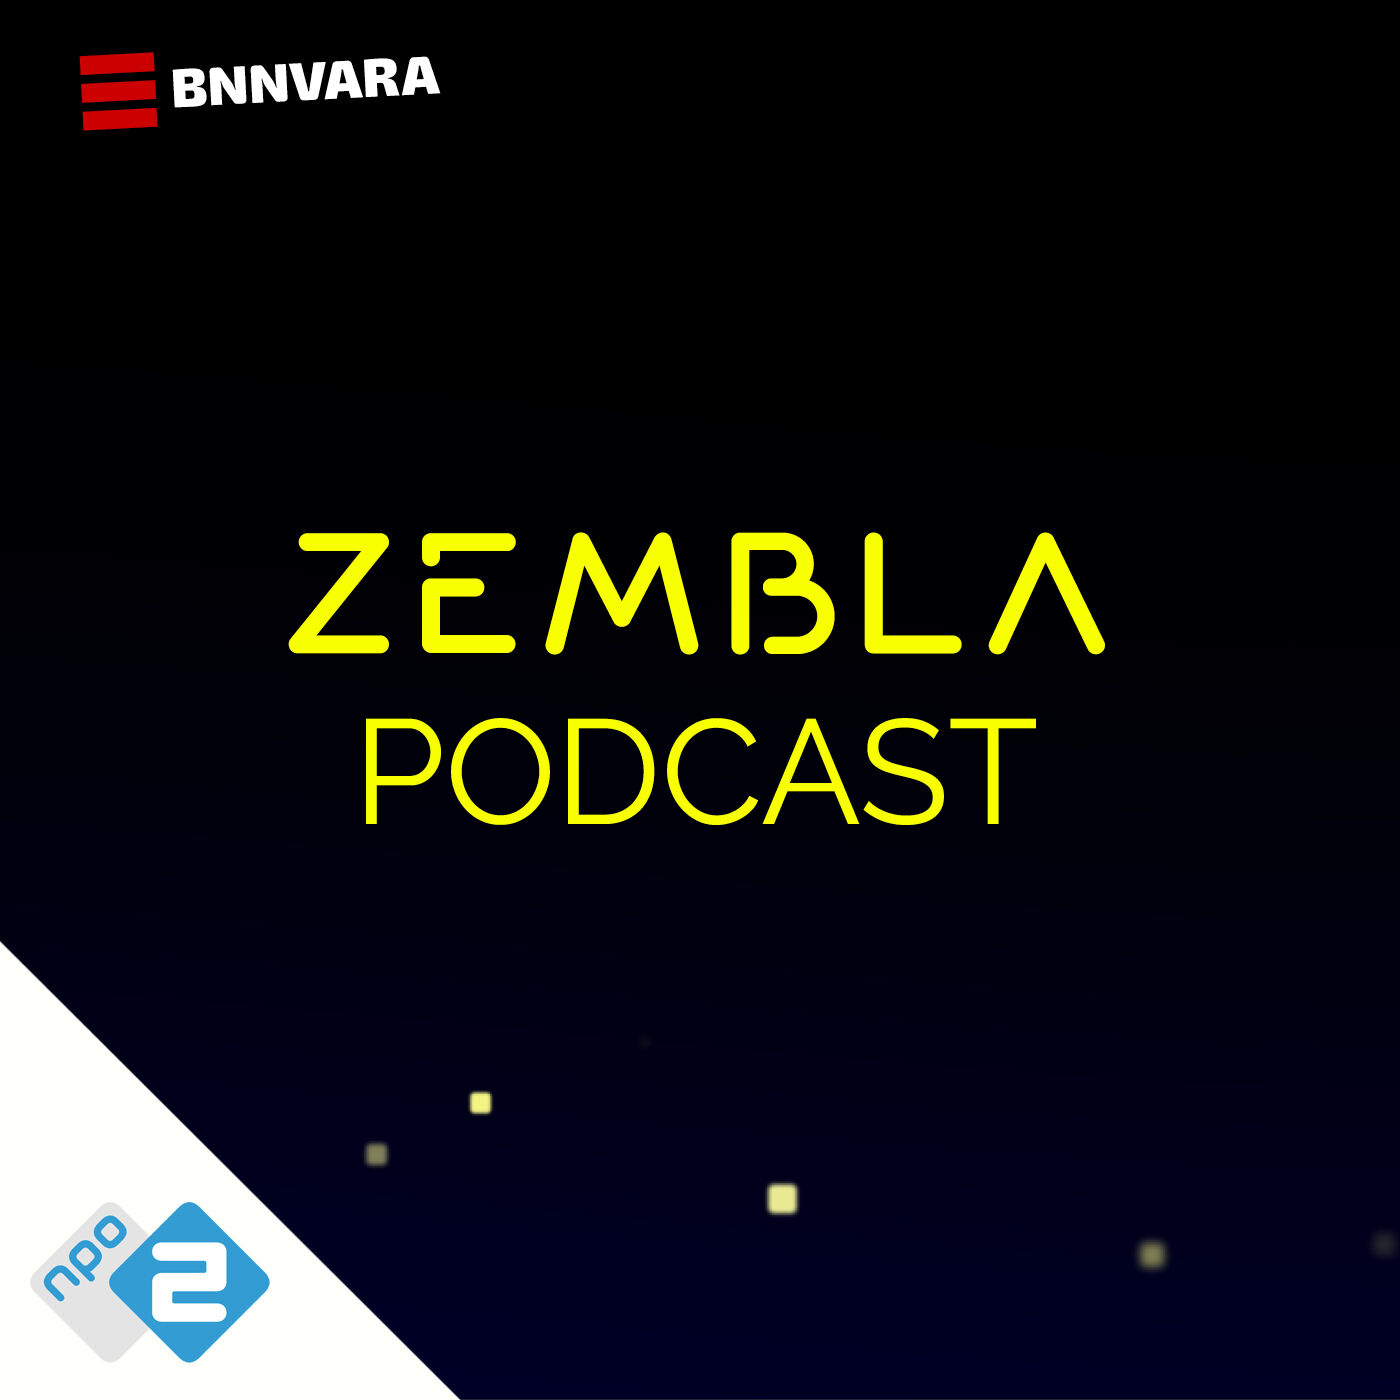 Zembla podcast logo